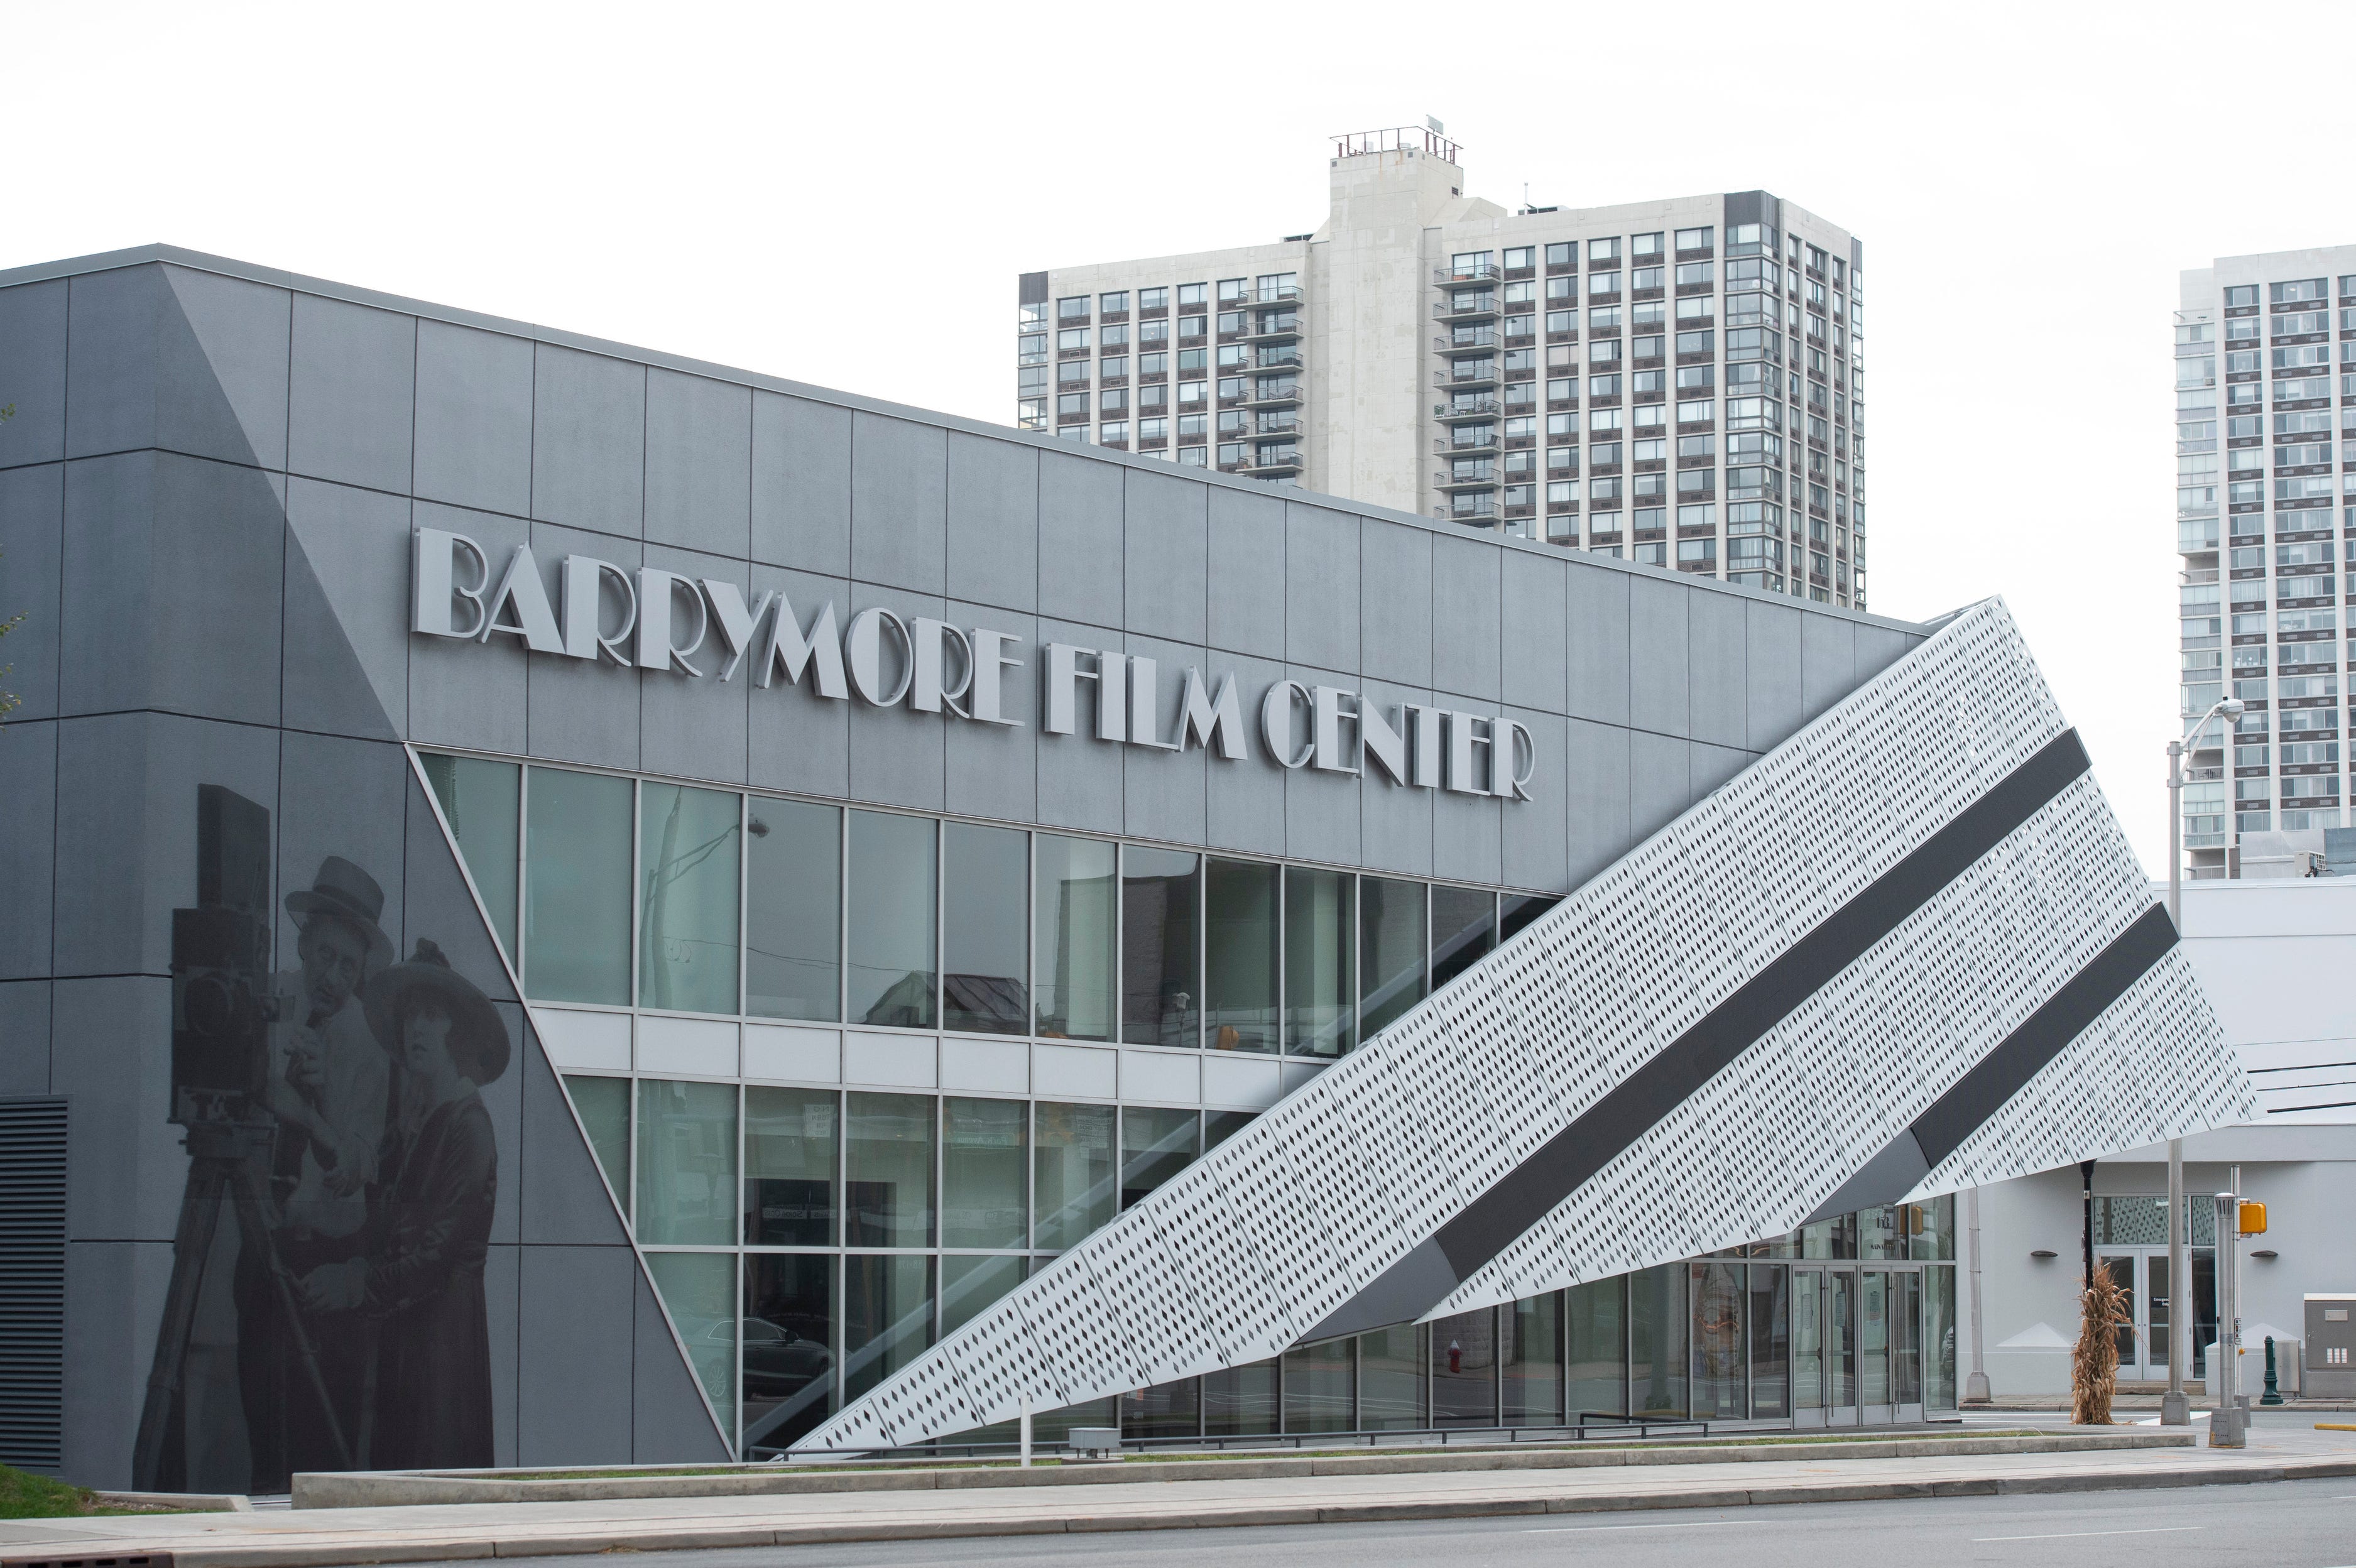 Fort Lee NJ: Barrymore Film Center coming soon after delays